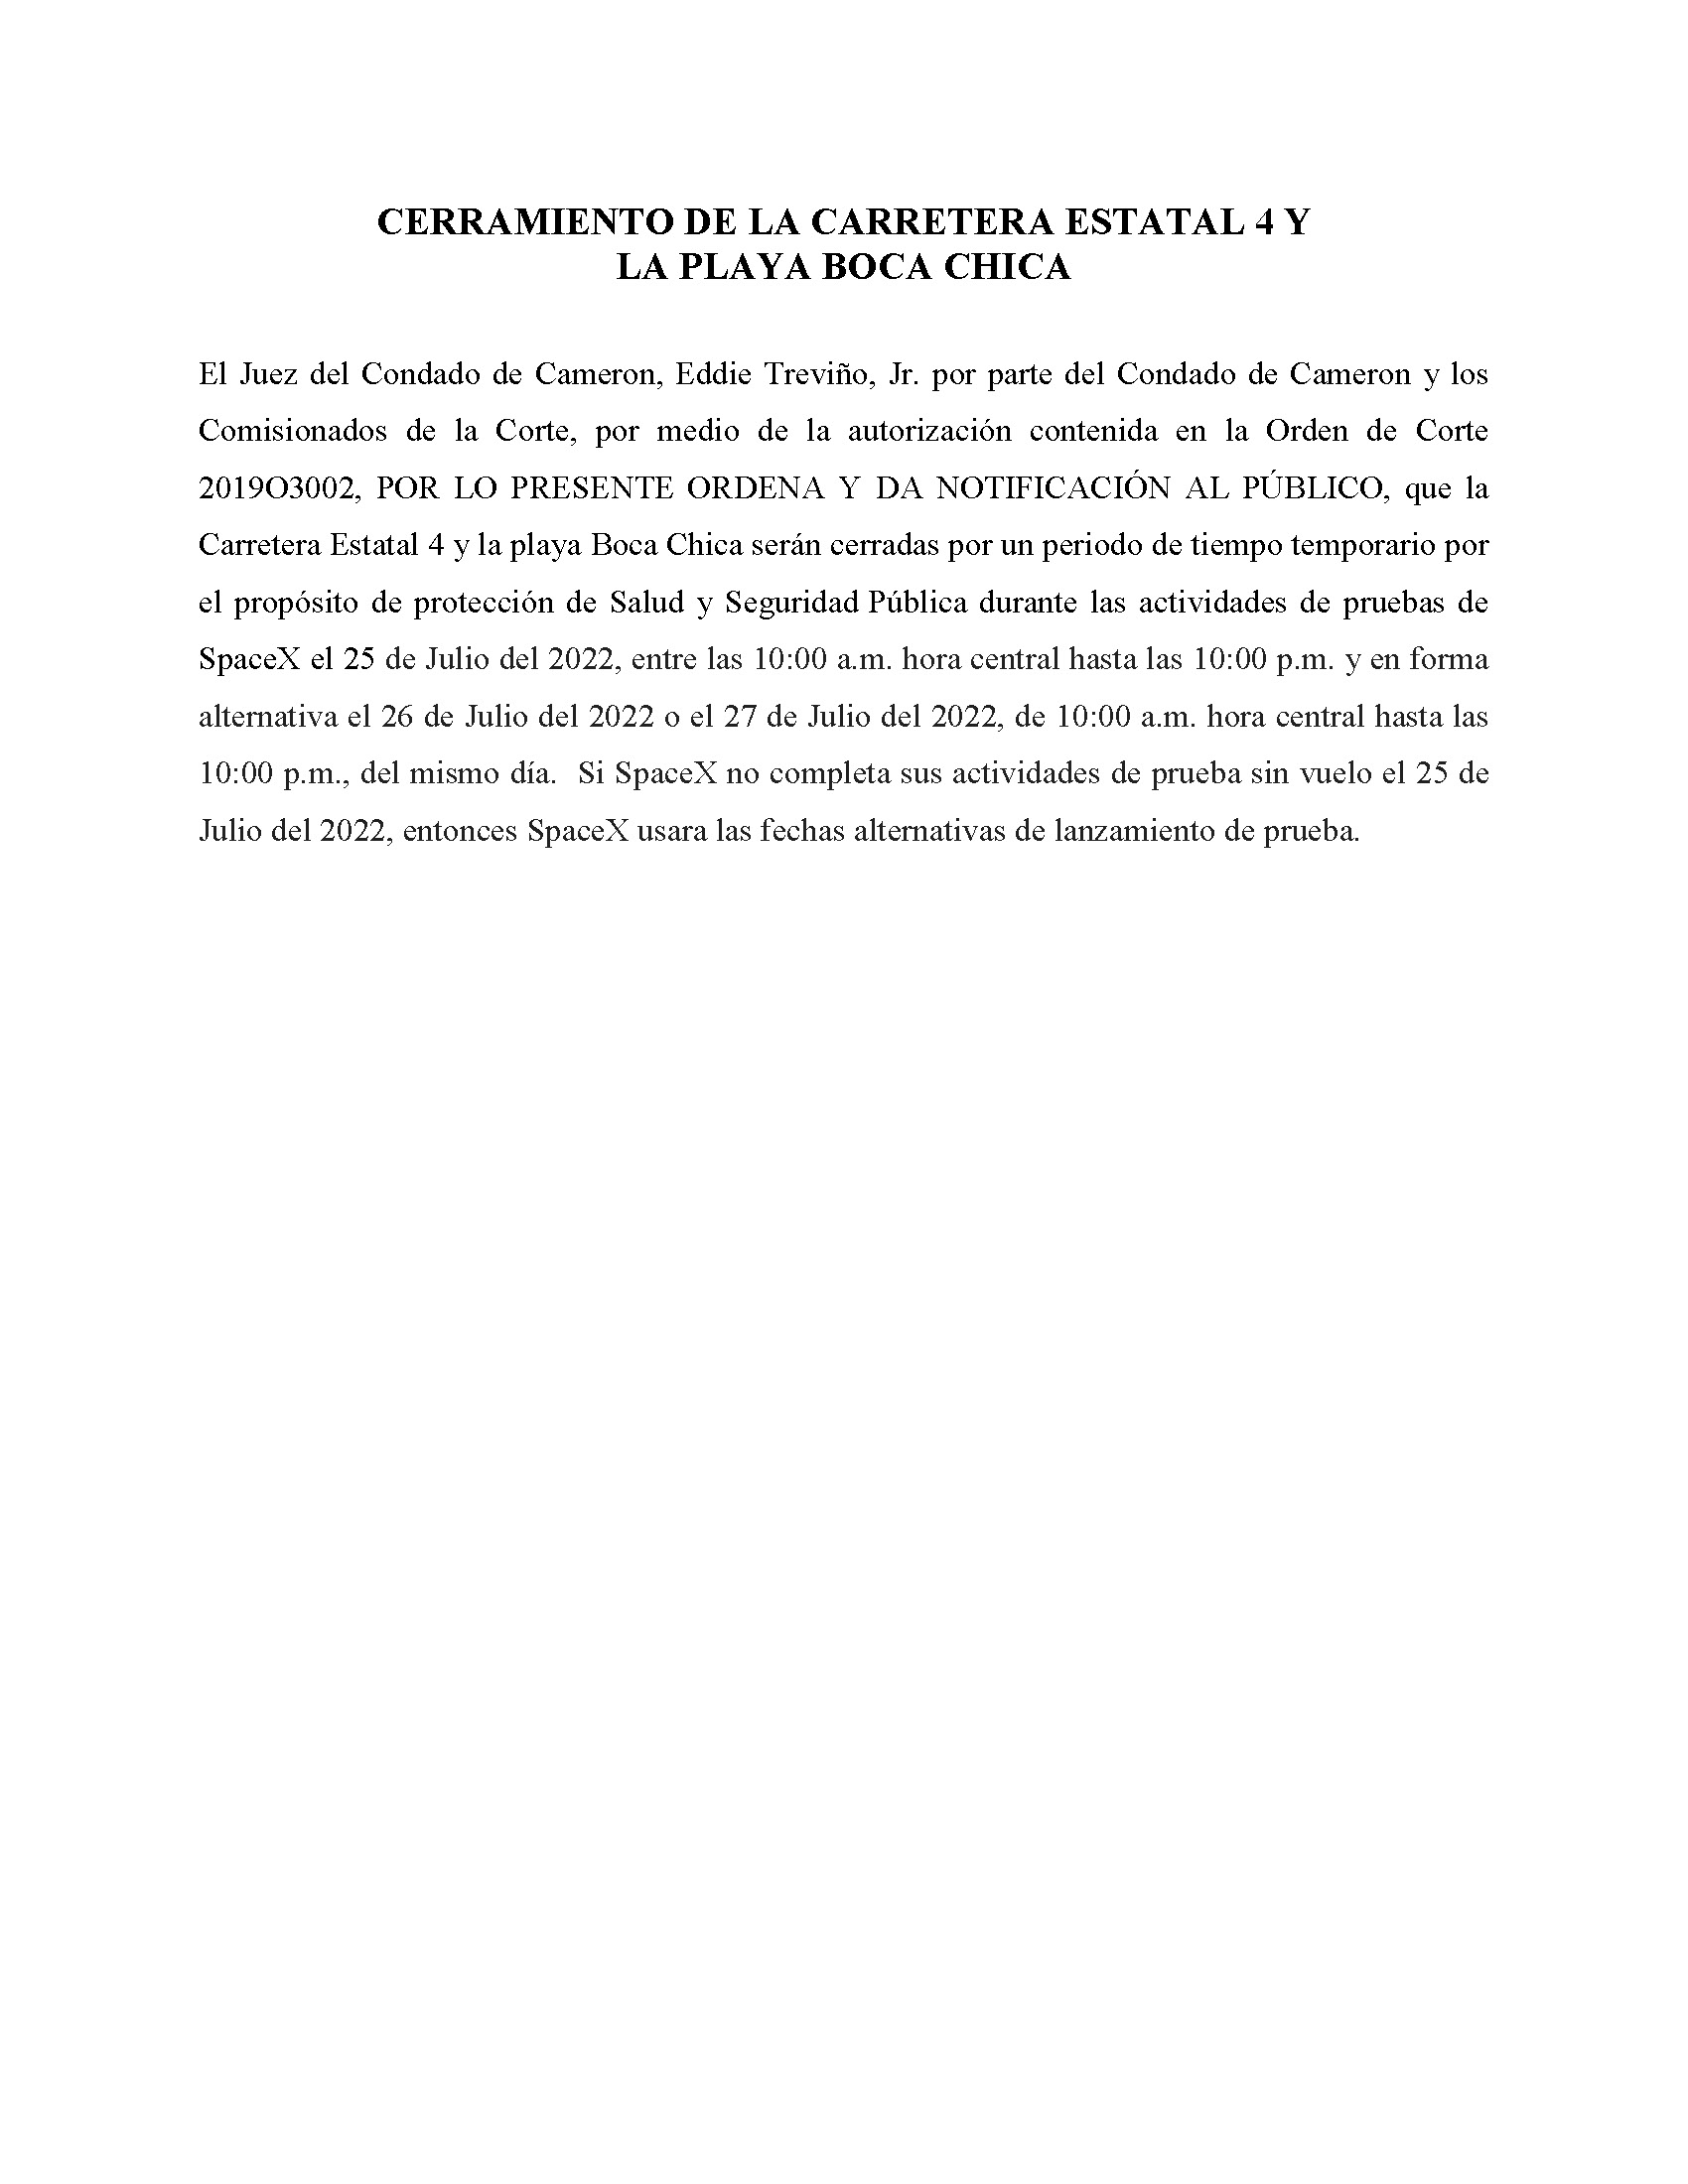 ORDER.CLOSURE OF HIGHWAY 4 Y LA PLAYA BOCA CHICA.SPANISH.07.25.2022